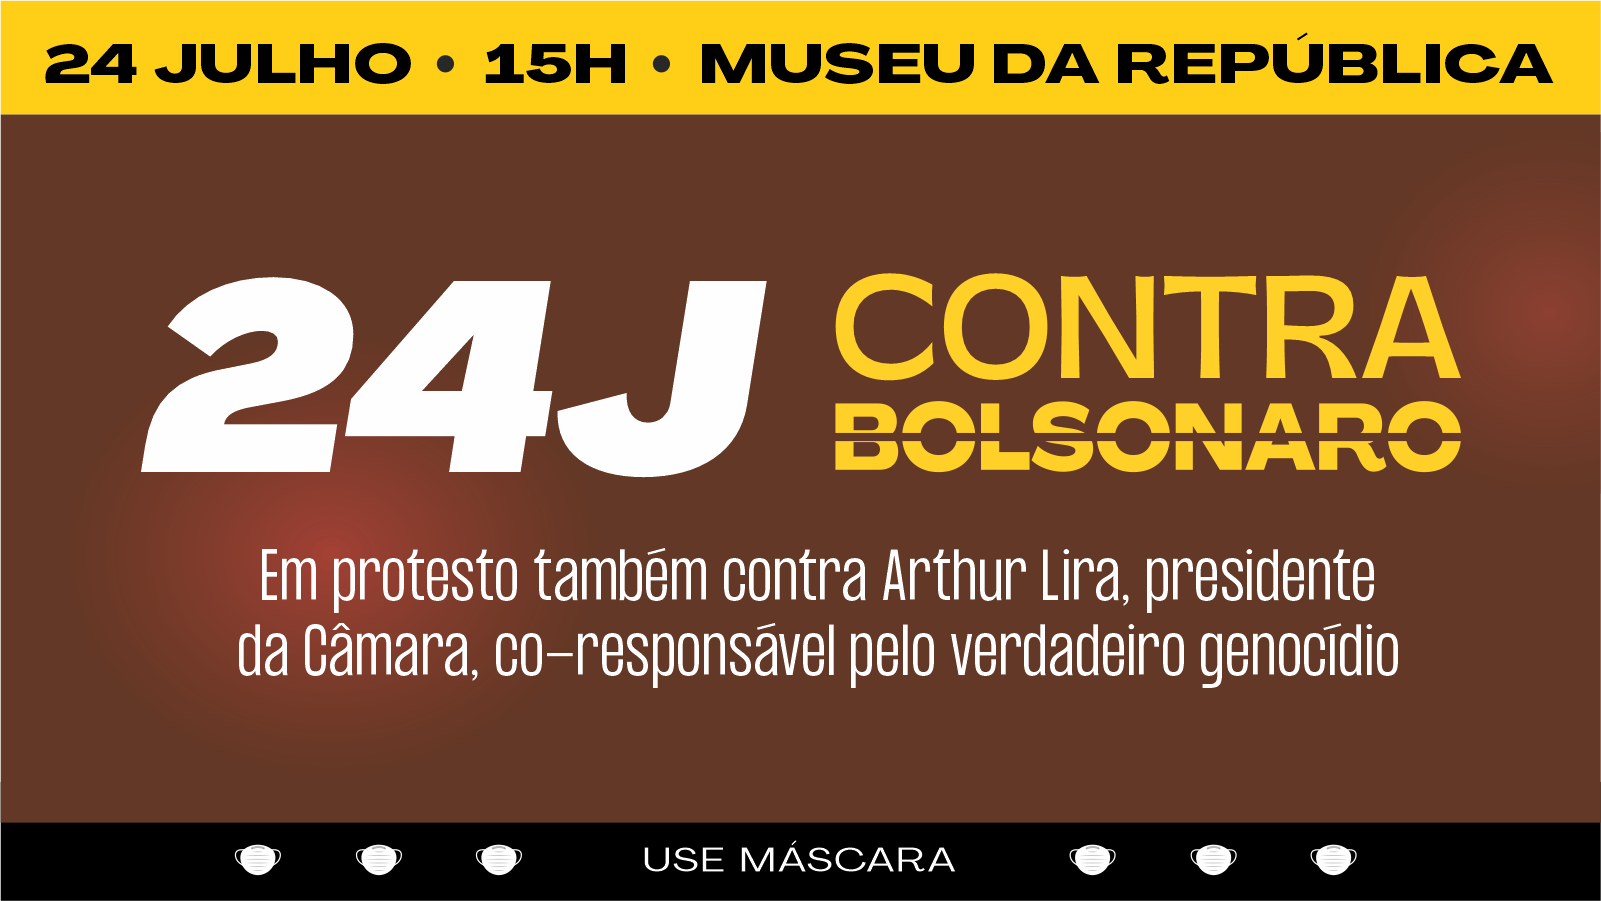 24J: Vamos às ruas protestar contra Bolsonaro e Arthur Lira